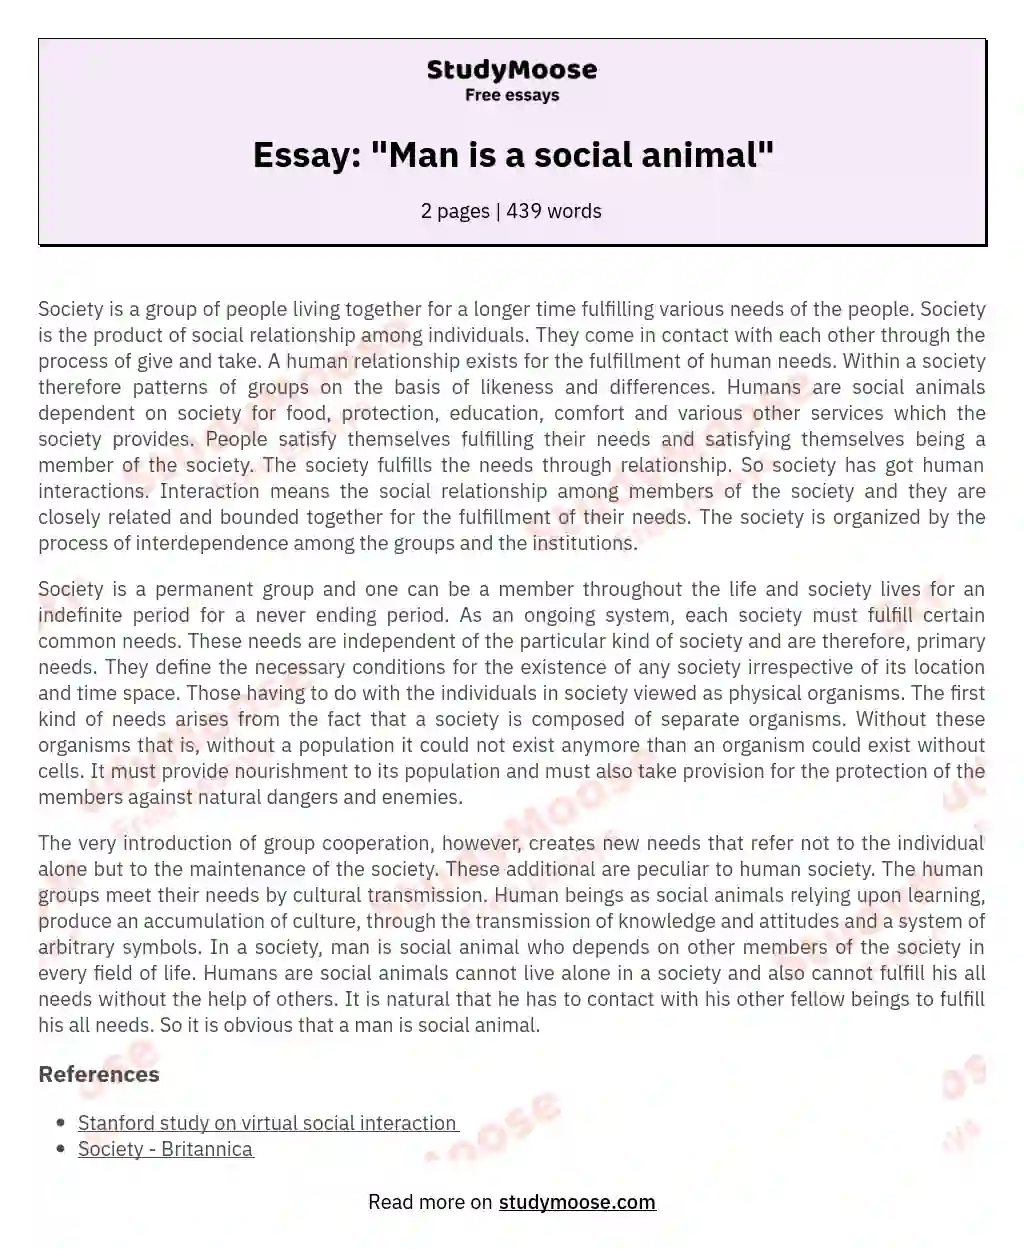 Essay: "Man is a social animal" essay